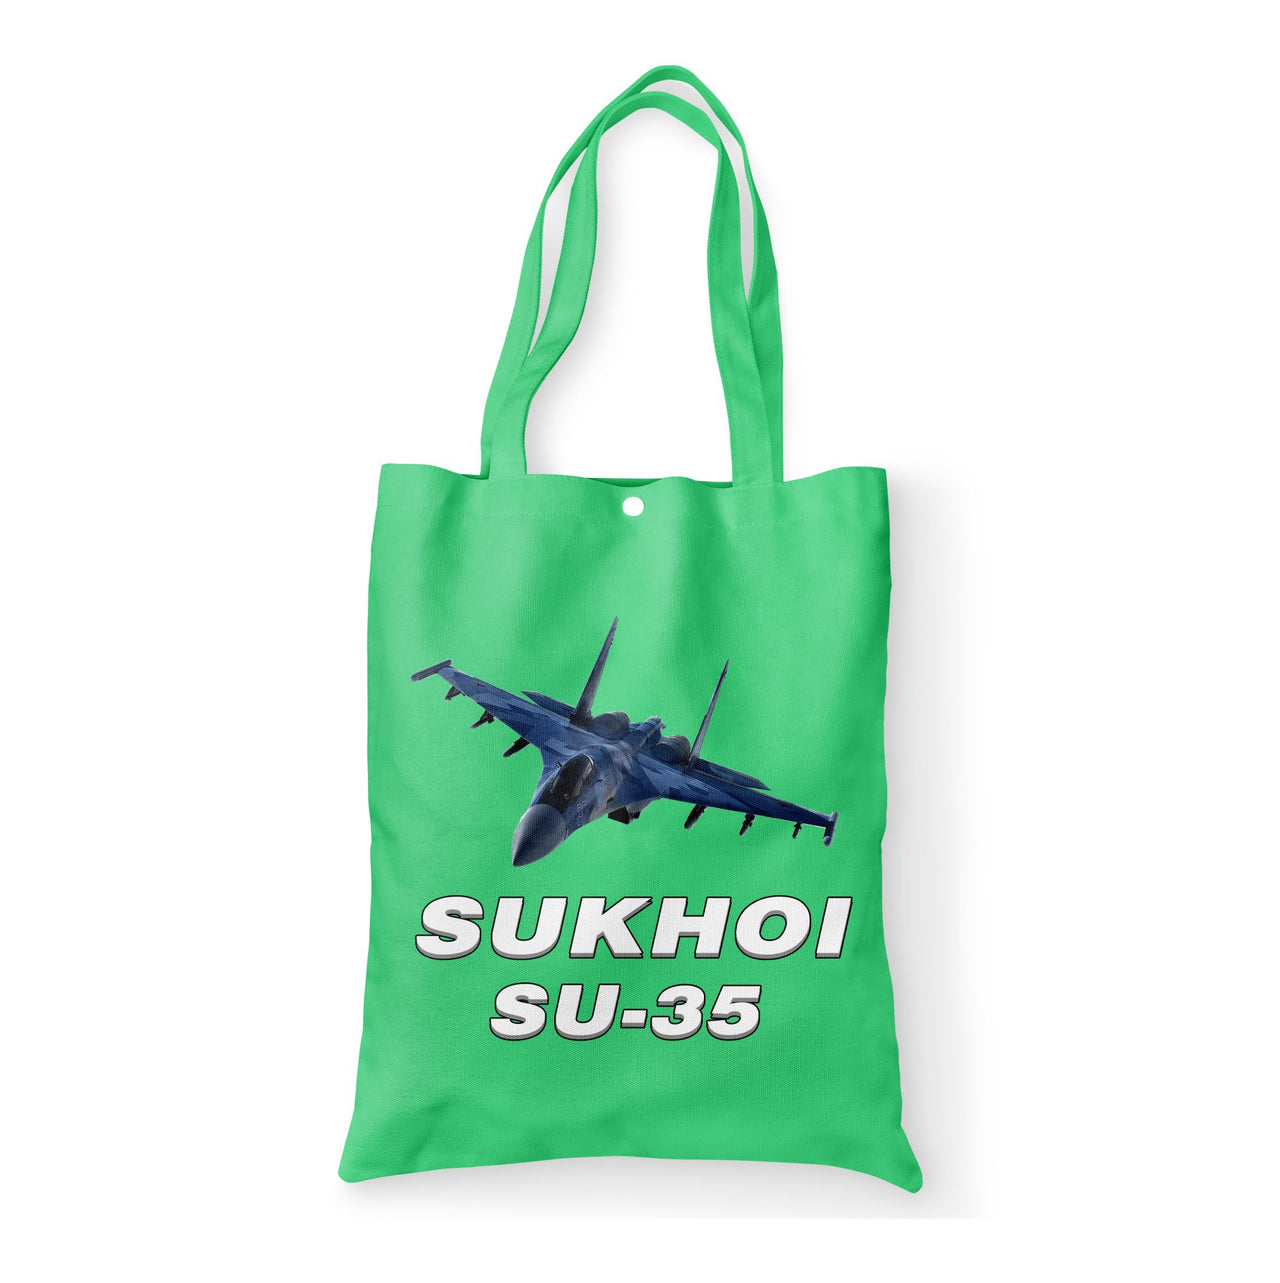 The Sukhoi SU-35 Designed Tote Bags